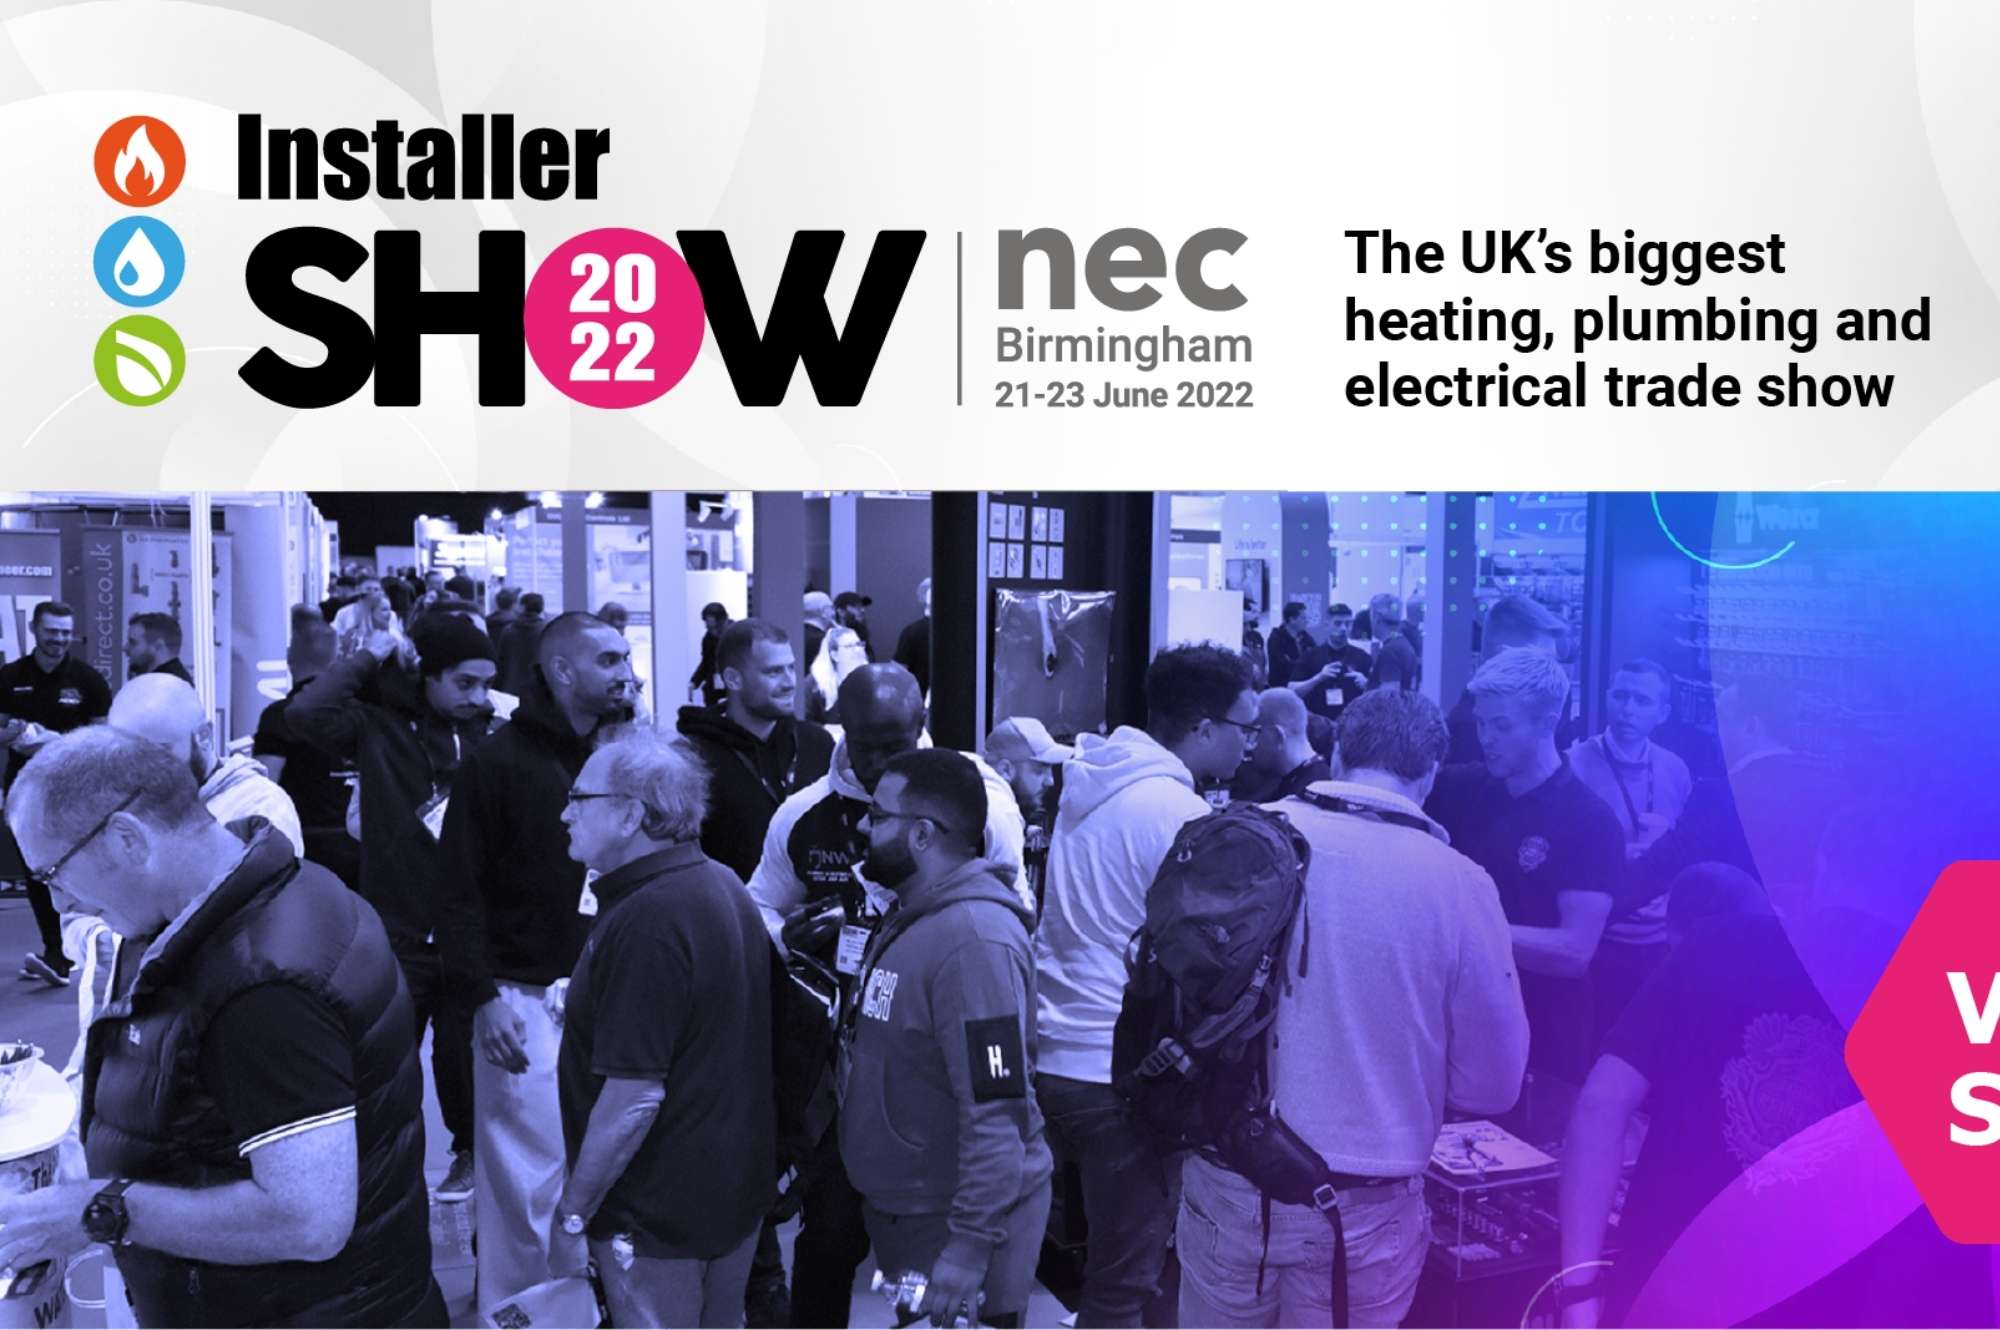 JTL joins the 2022 Installer Show at the NEC Birmingham